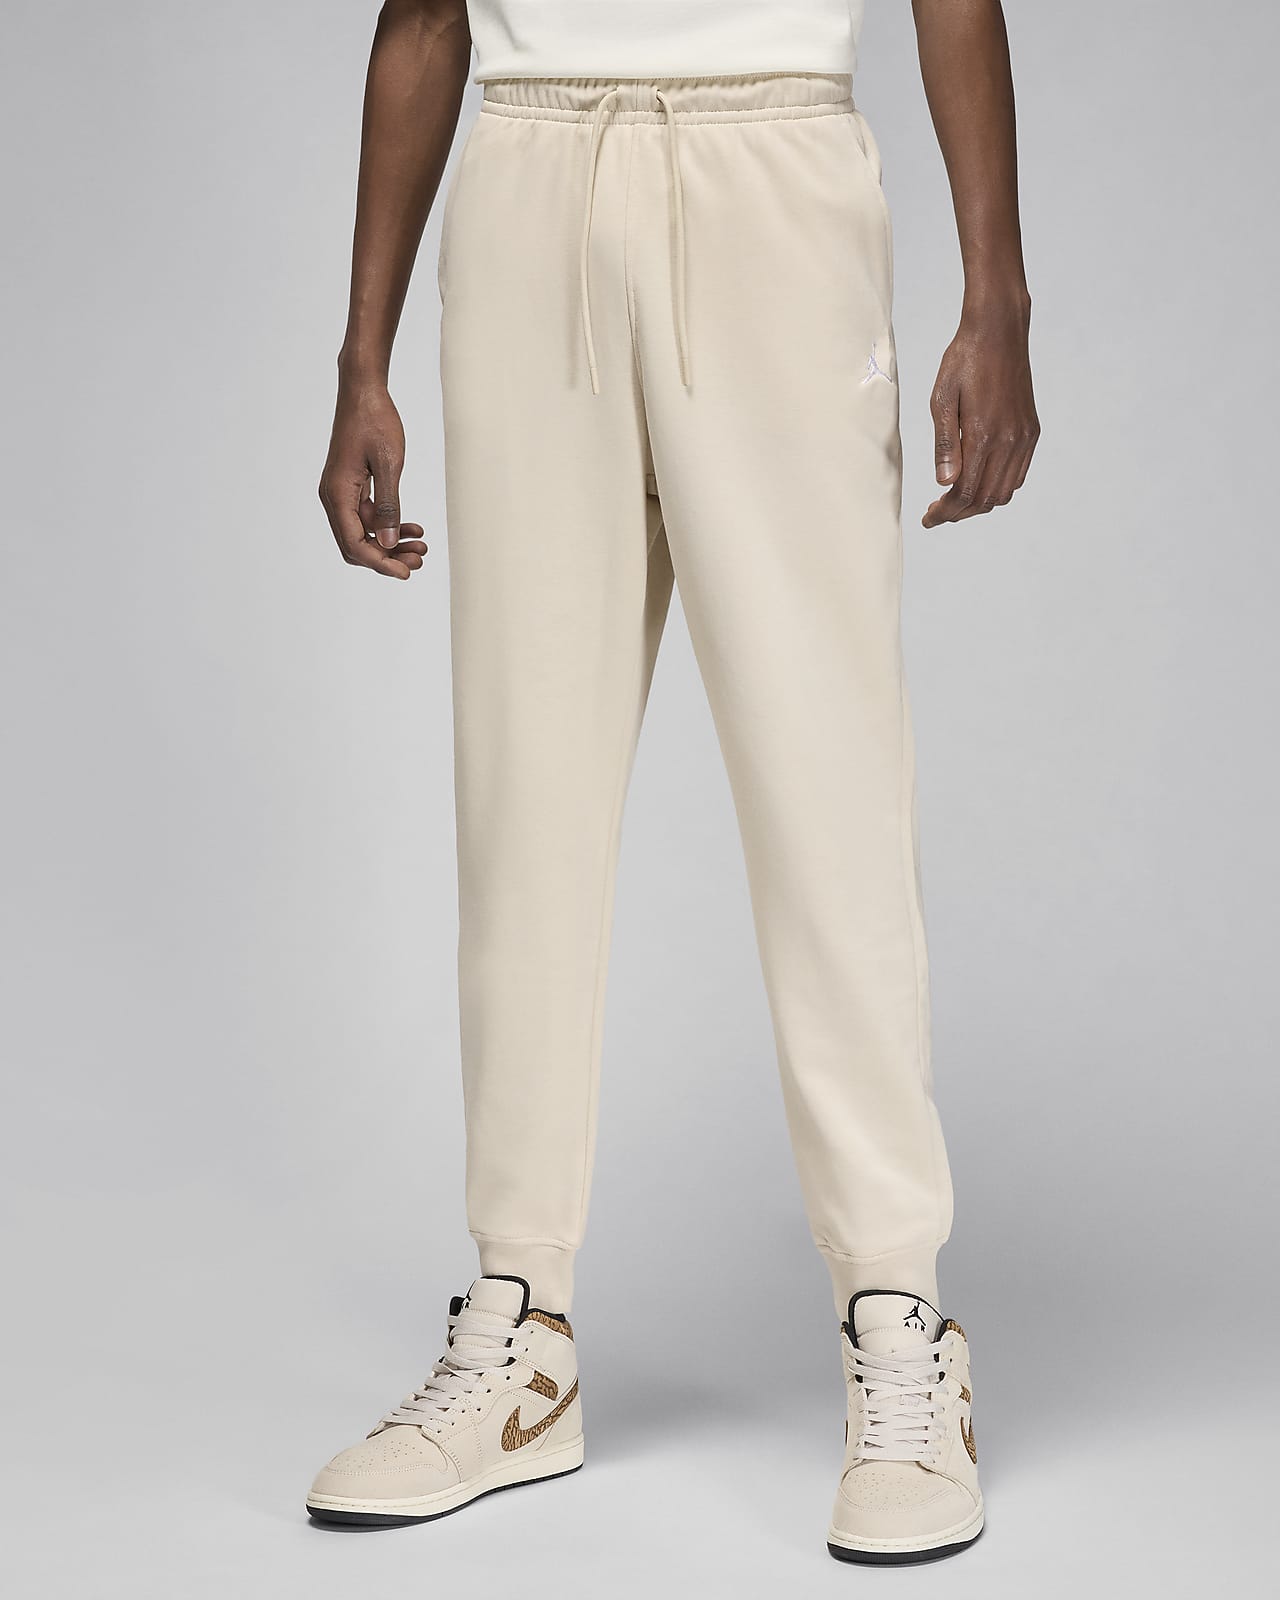 Pantaloni in fleece con rovescio non spazzolato Jordan Essentials – Uomo